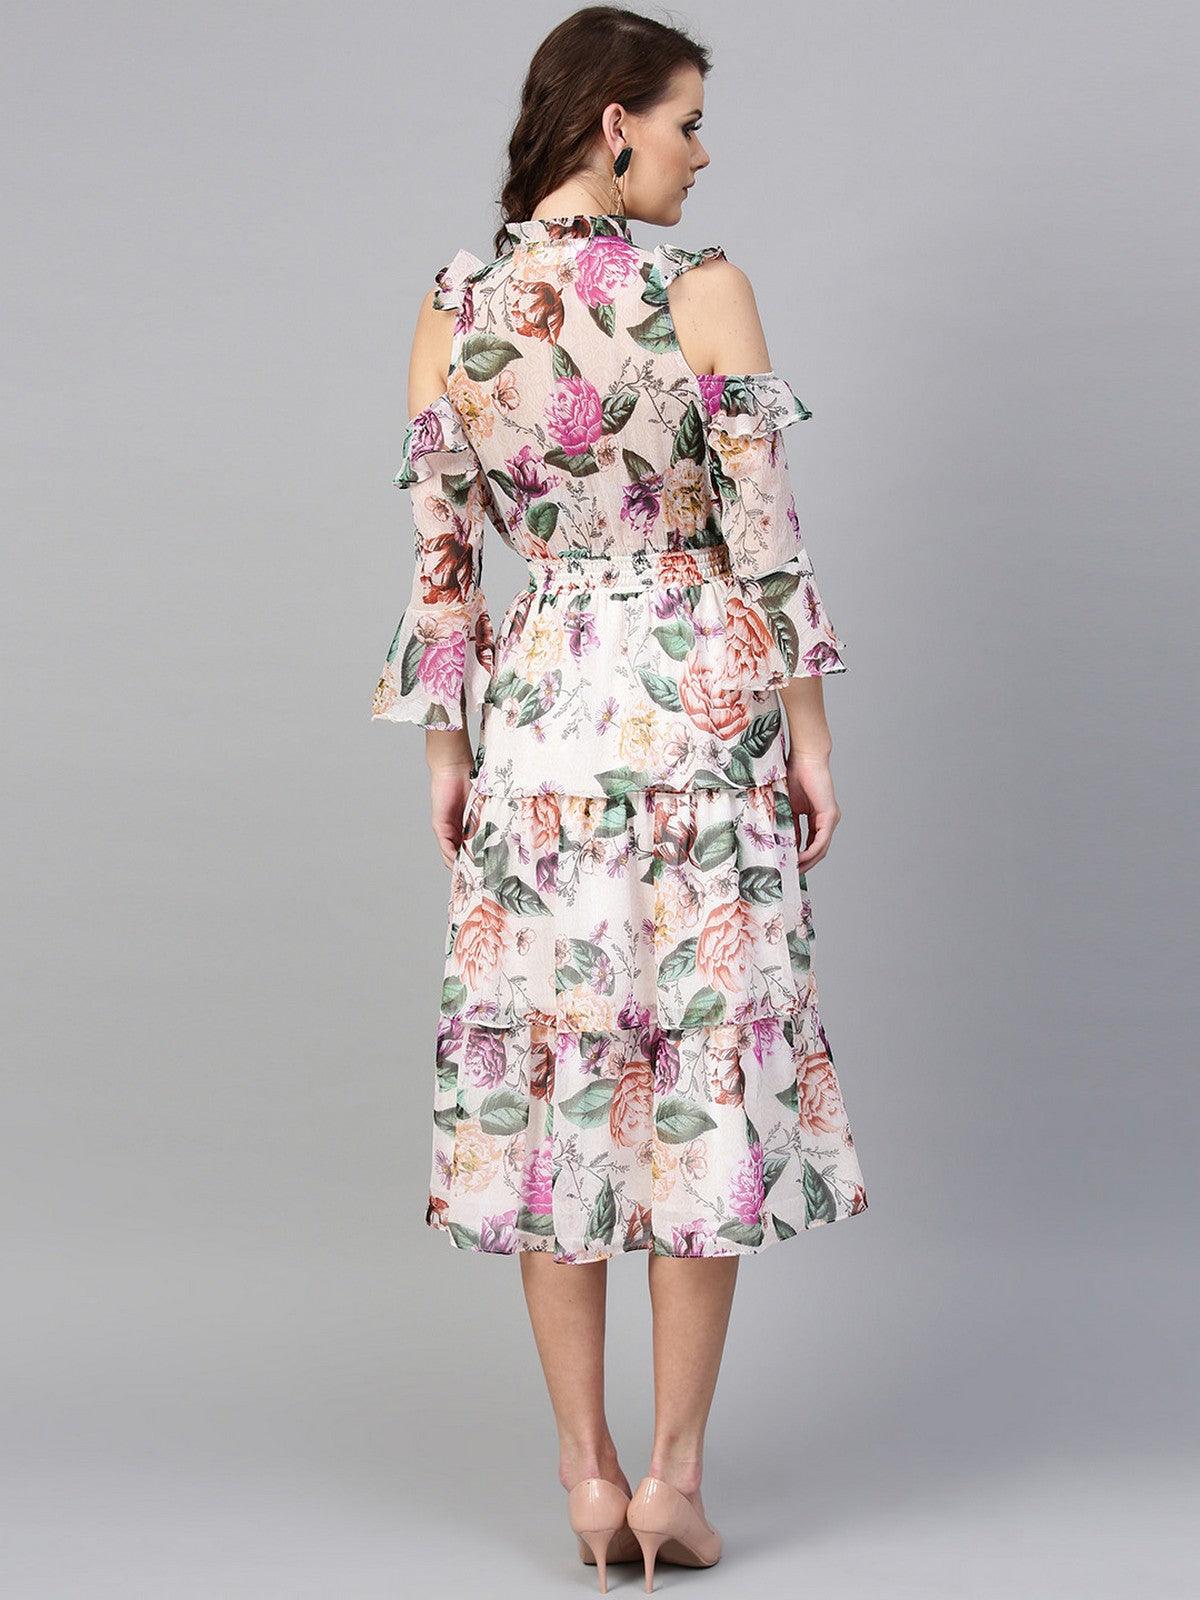 Floral Printed Chiffon Dress - Znxclothing